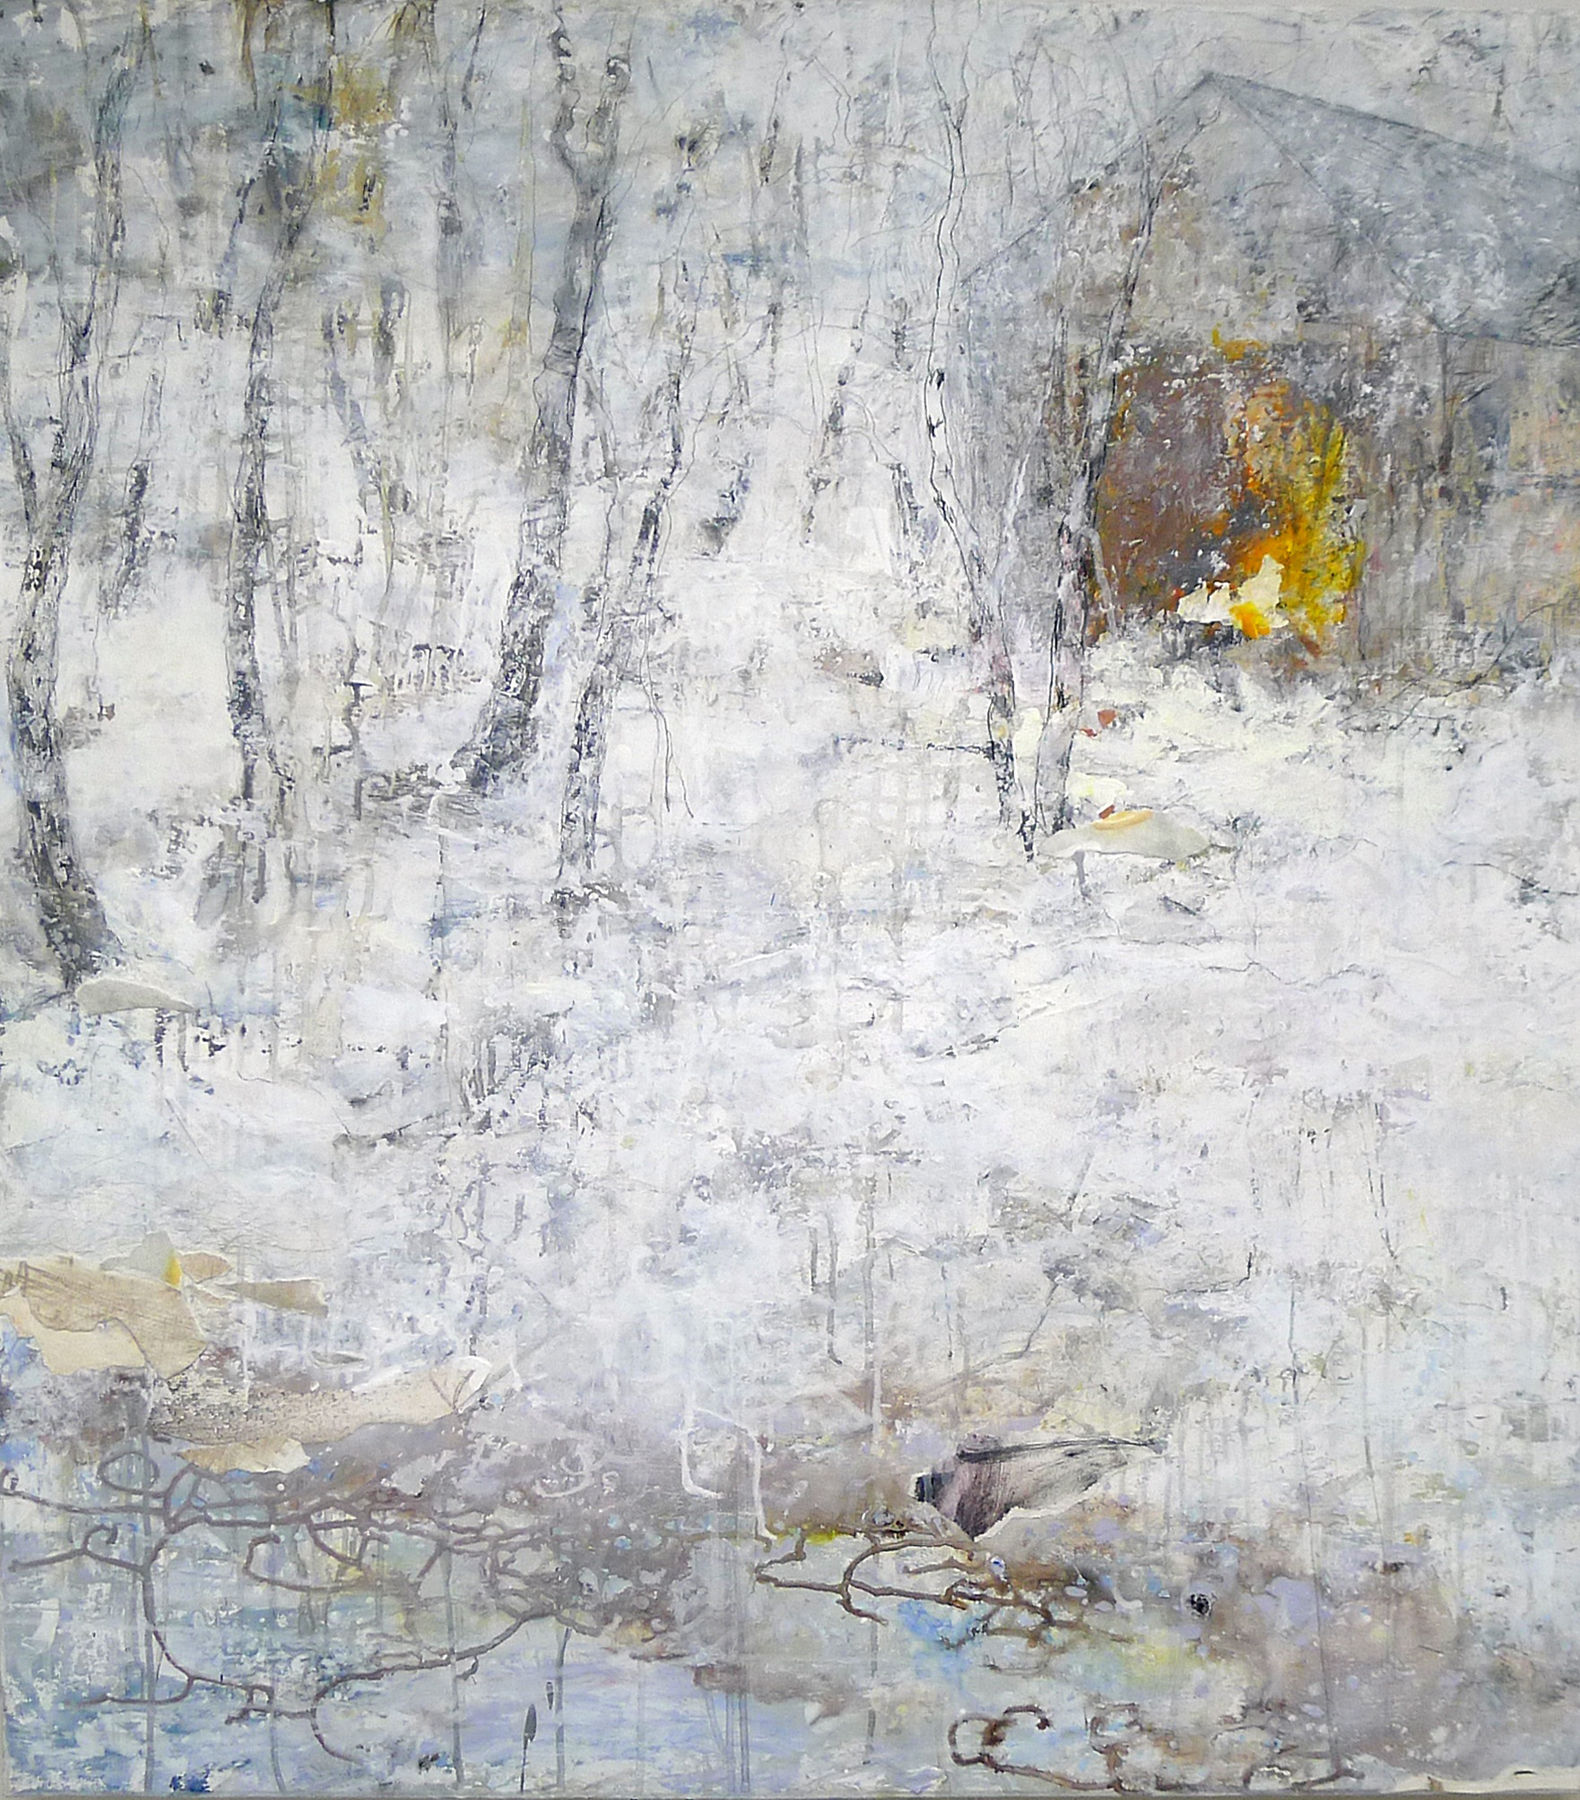   Brenda Cirioni, Barn Series: White Light,  mixed media, 40x36, $3,200 